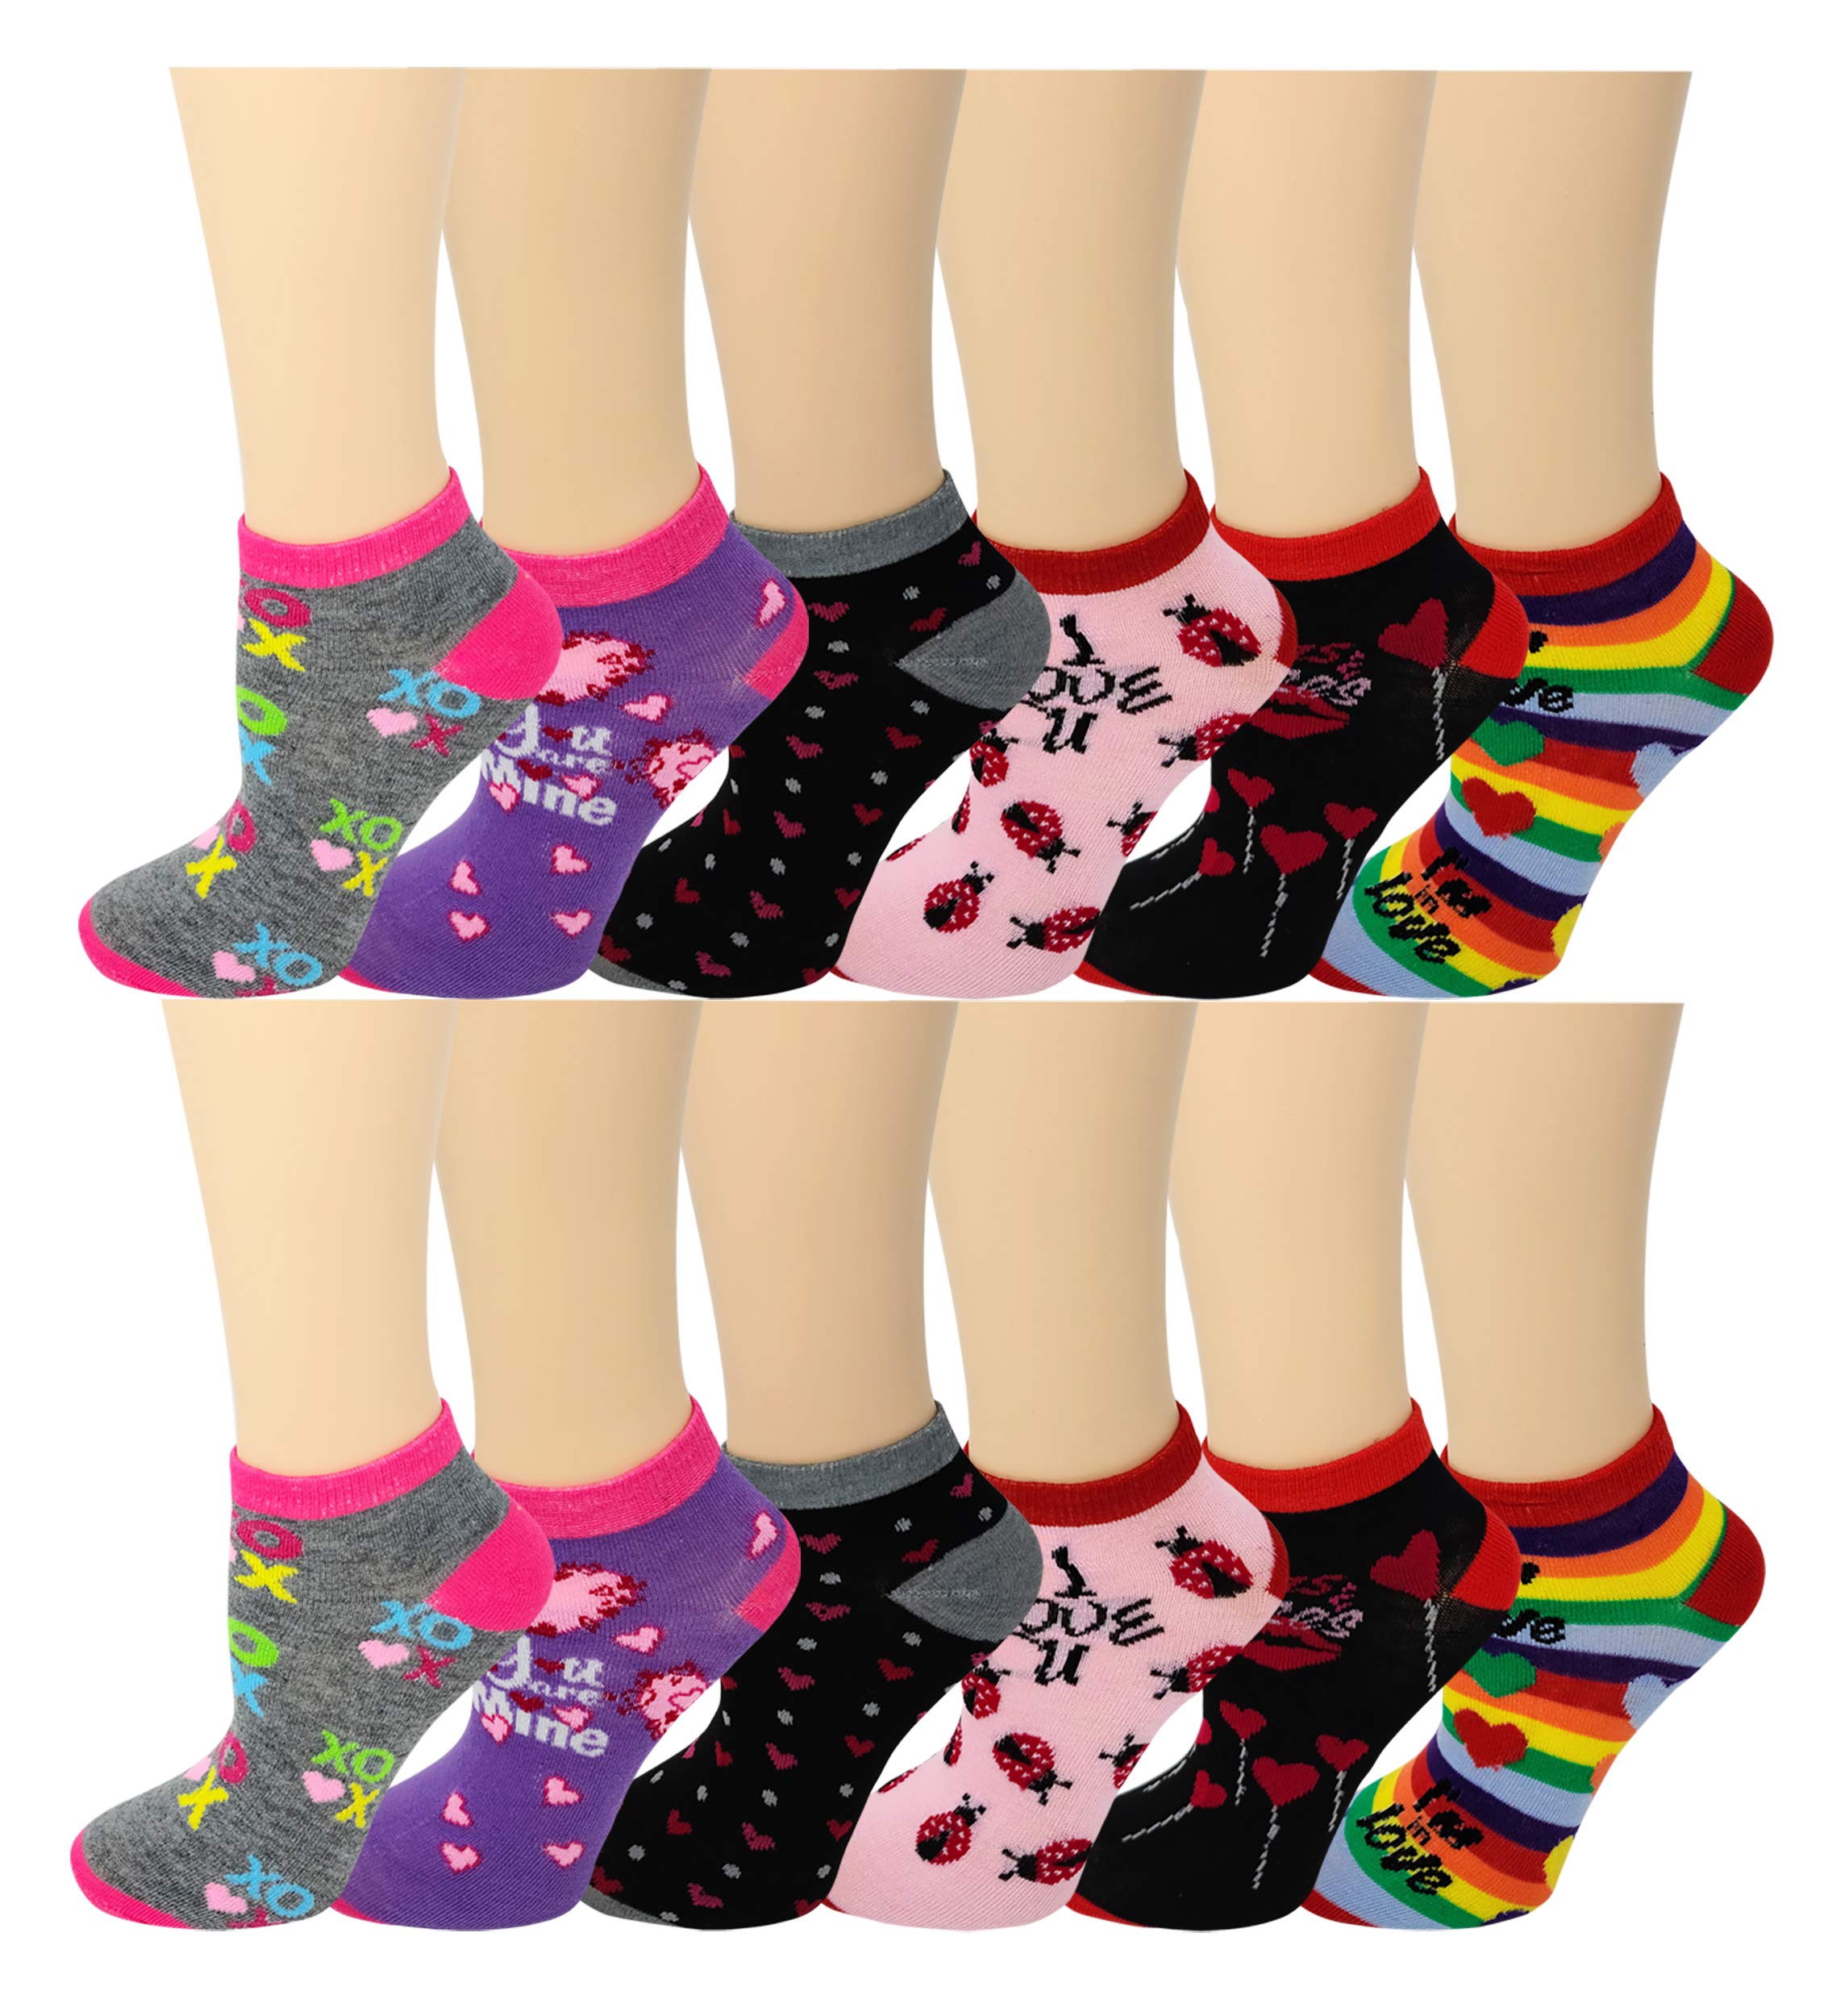 Sumona Valentine's Day Socks